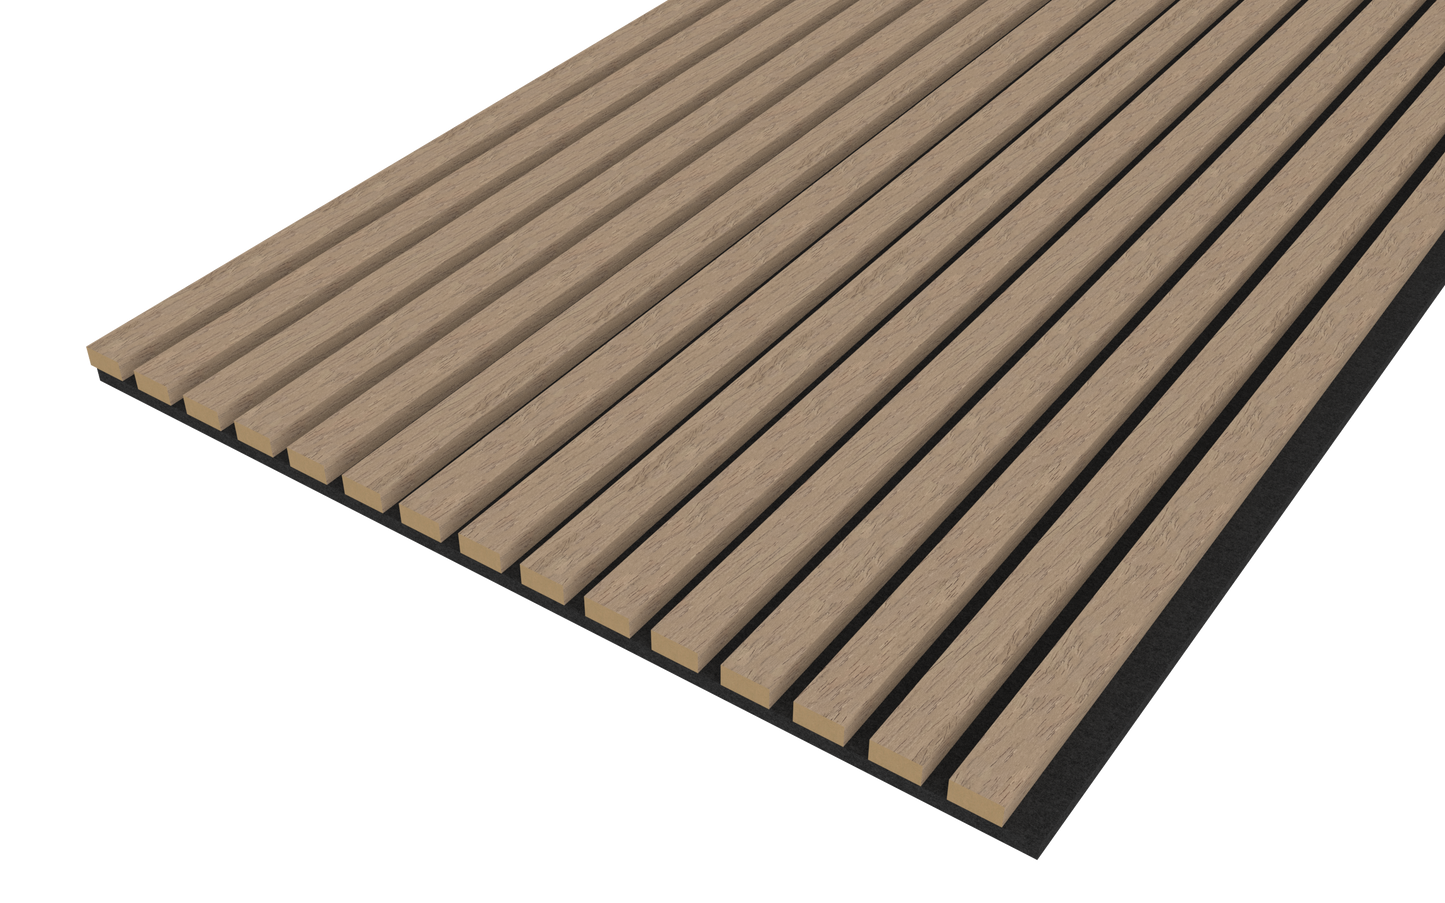 Walnut Acoustic Wood Wall Panel Thin Slat Series 1 - 240/300x60cm